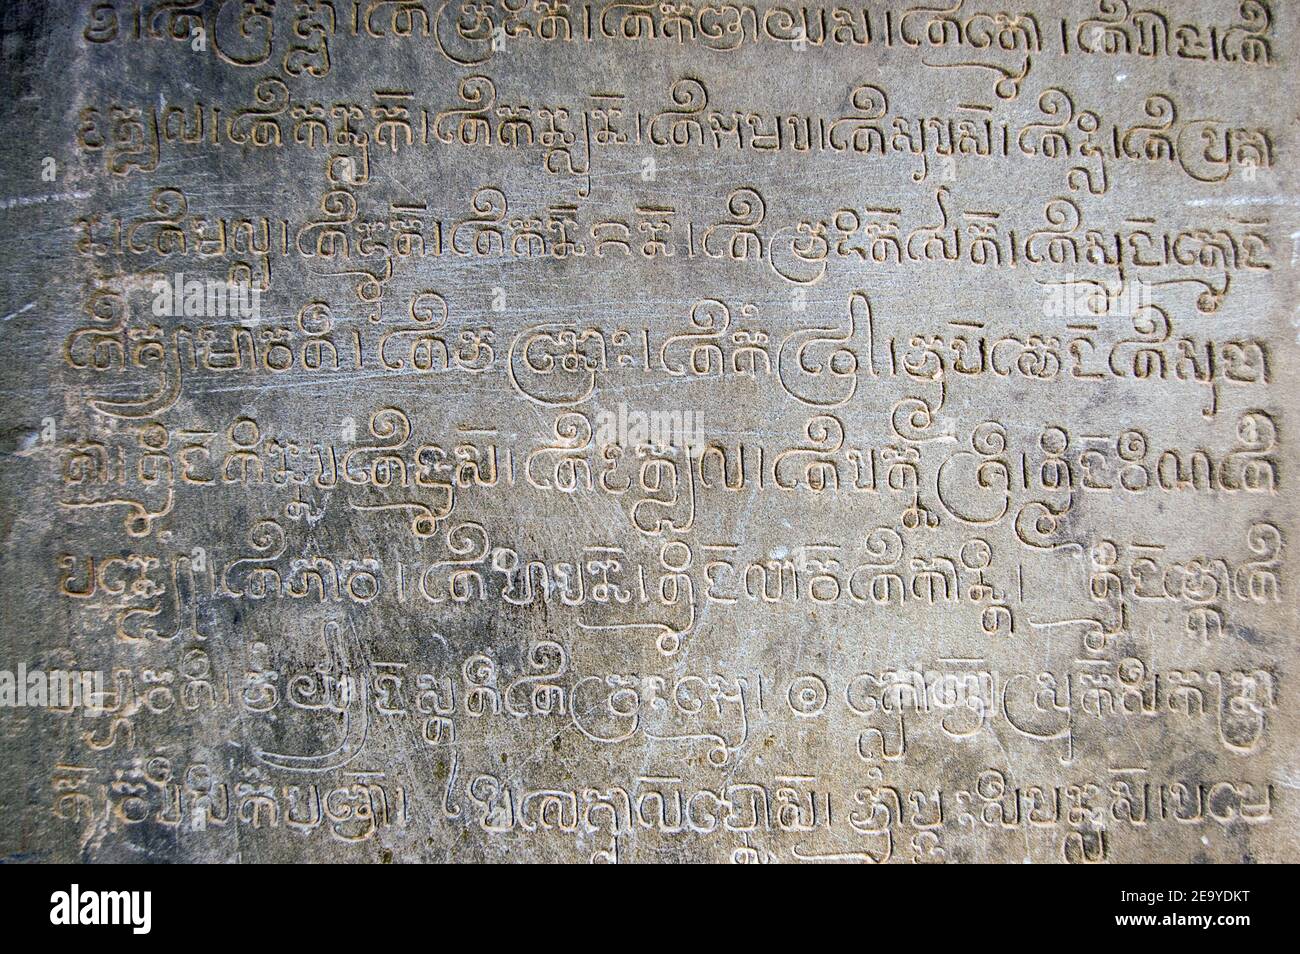 Sanskrit Religiöse Inschriften am Eingang zu einem prasat des Lolei  Tempels, Teil des Rolous Komplexes in Angkor, Siem Reap, Kambodscha.  Geschnitzt in der Stockfotografie - Alamy